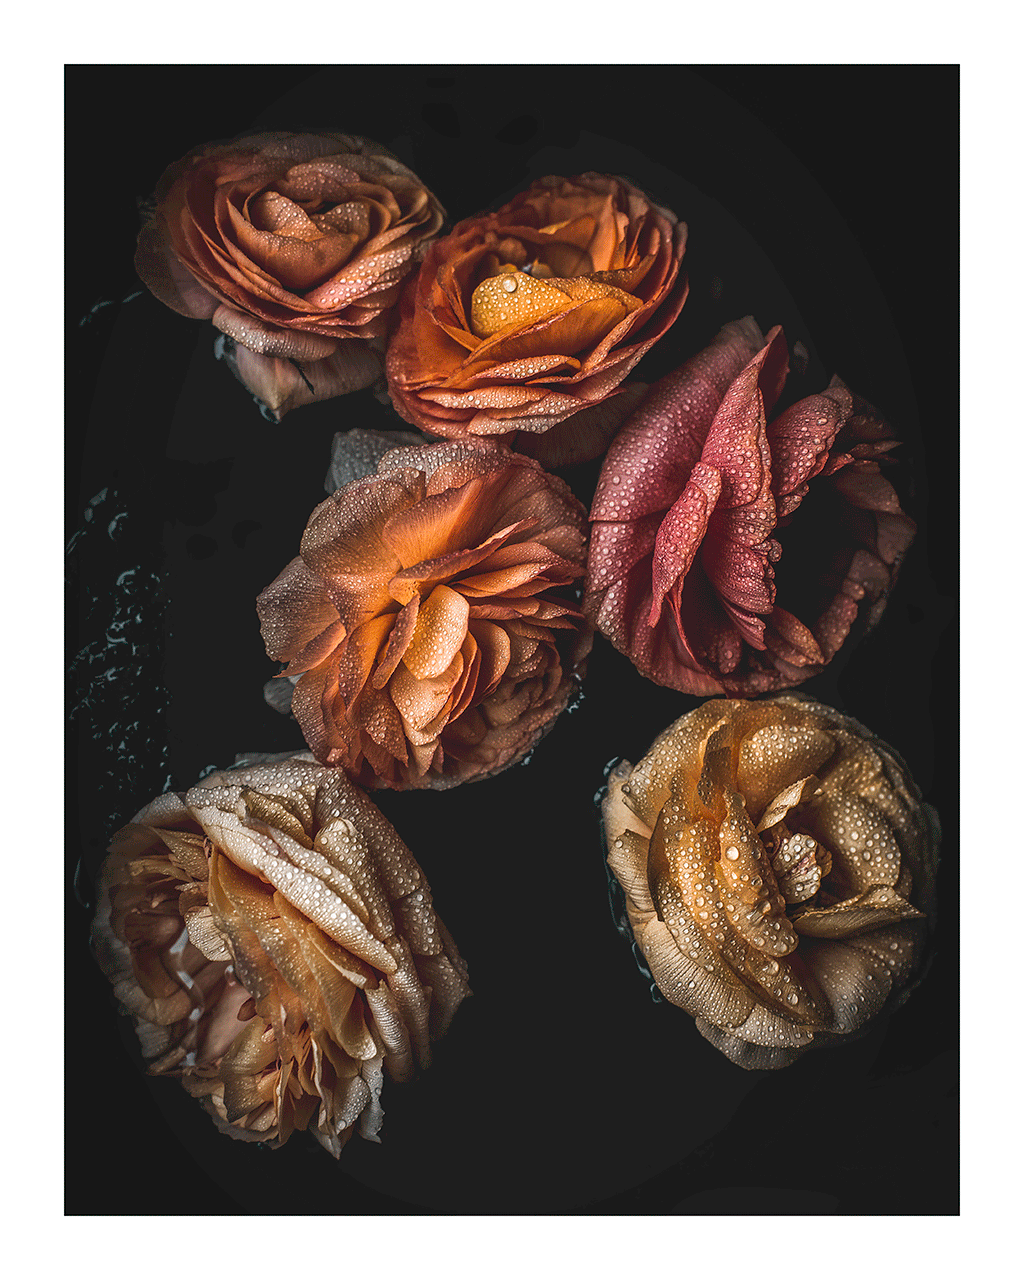 Late Spring Morning Dew | Flower Print | Elena Dragoi